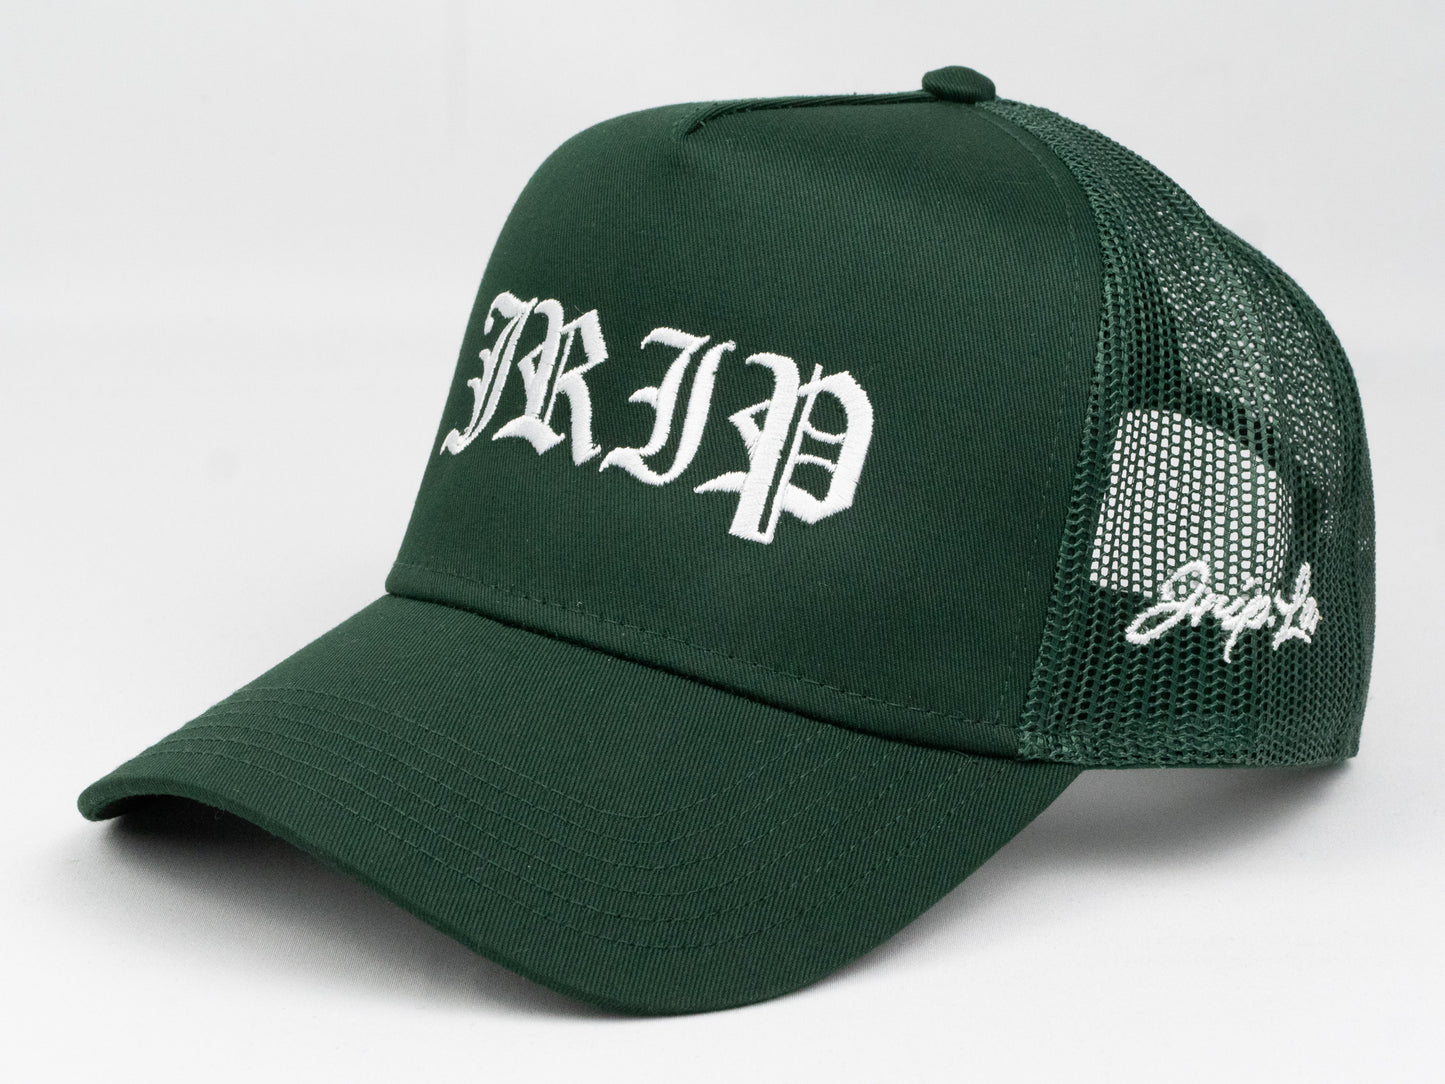 Jrip Script Structured Trucker Hat (GREEN)